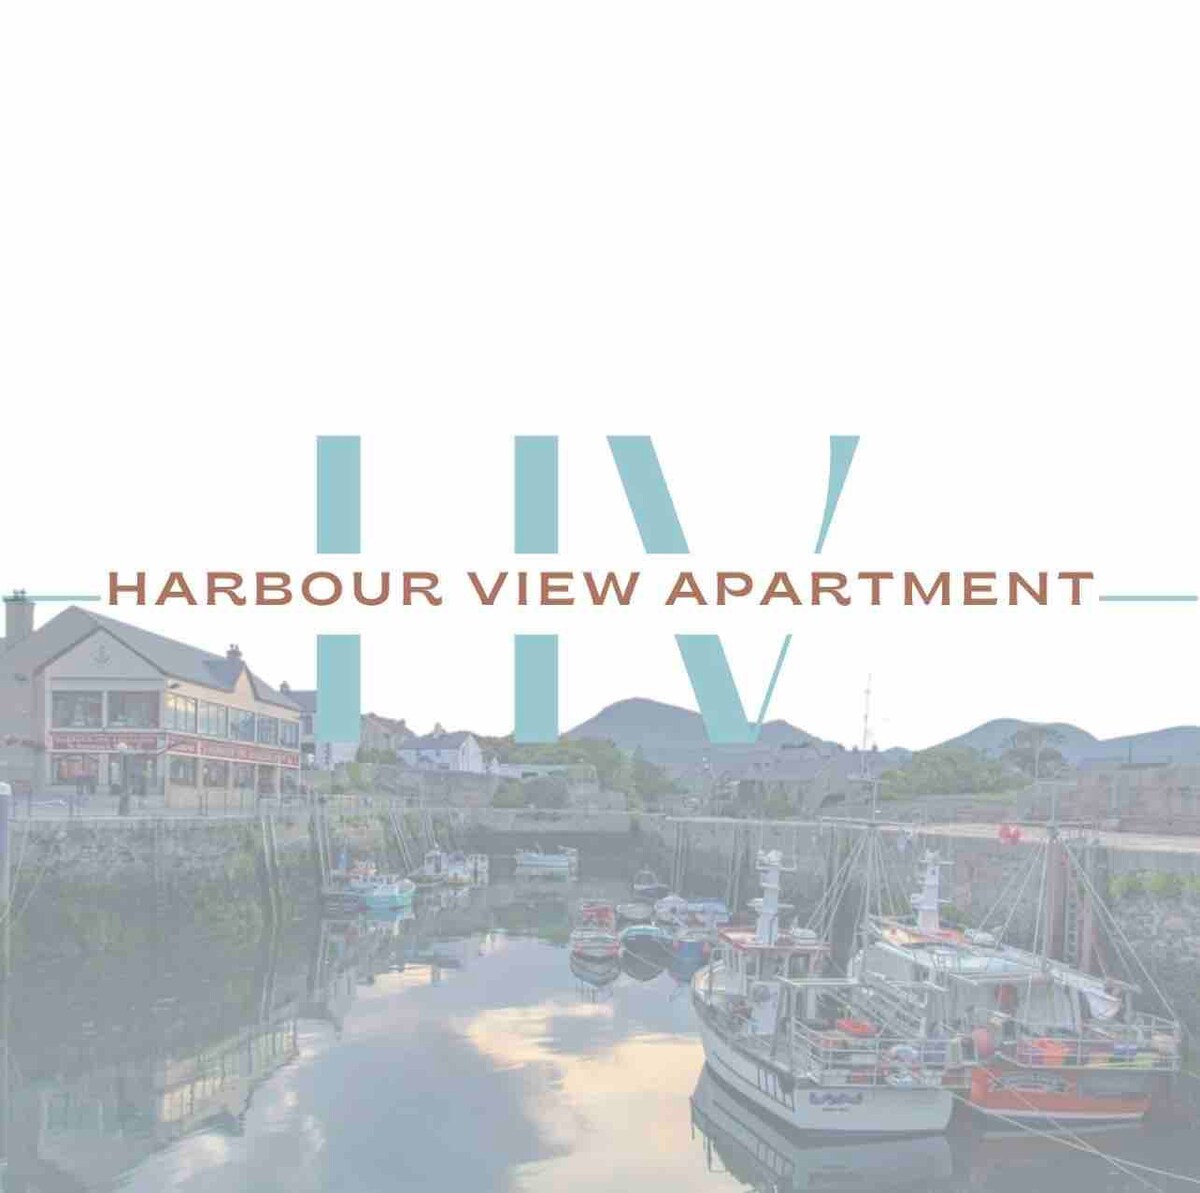 Harbour view Apartment